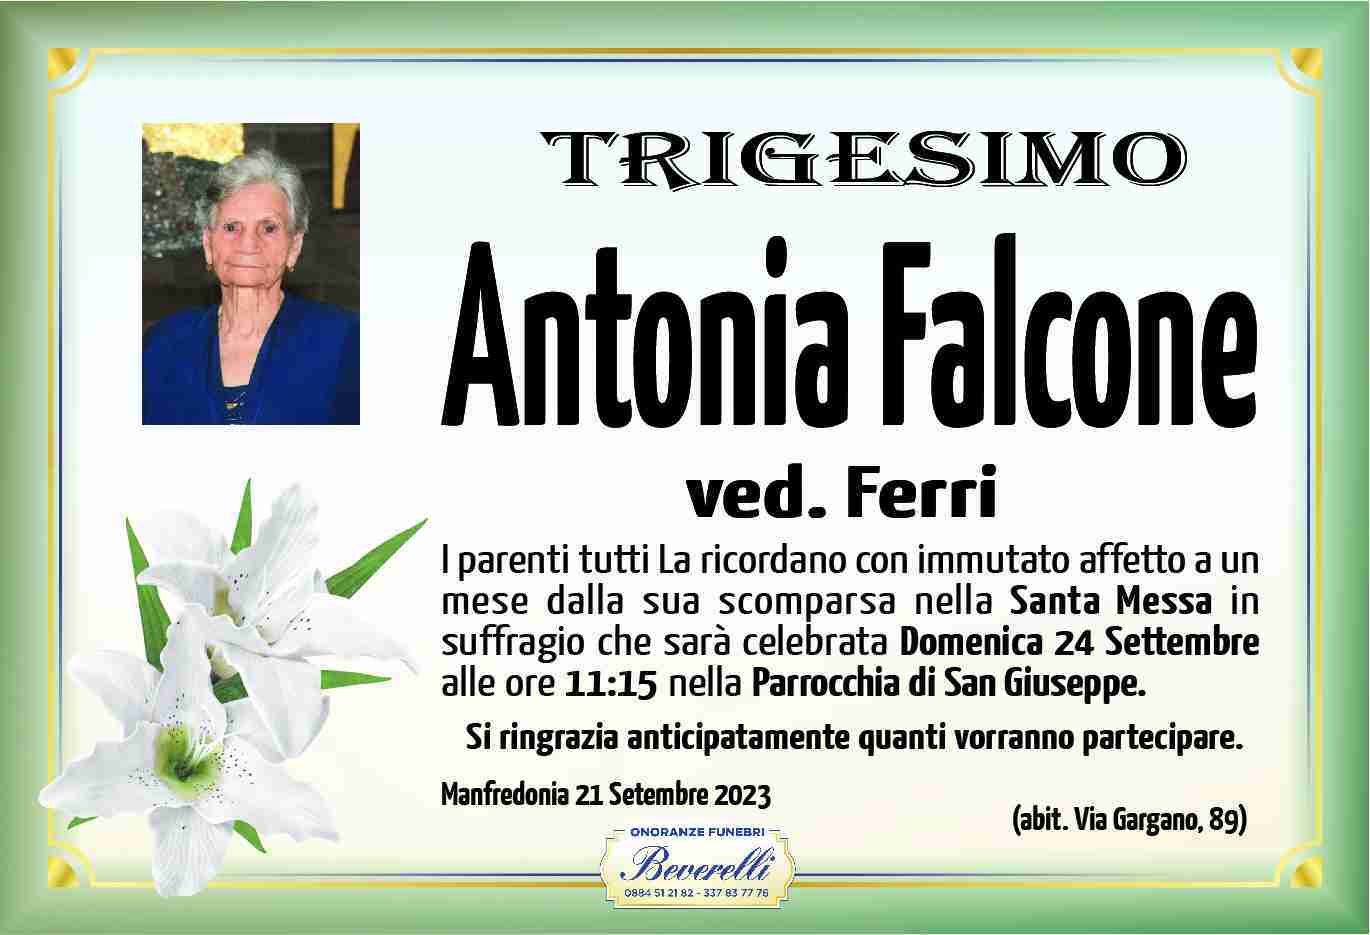 Antonia Falcone